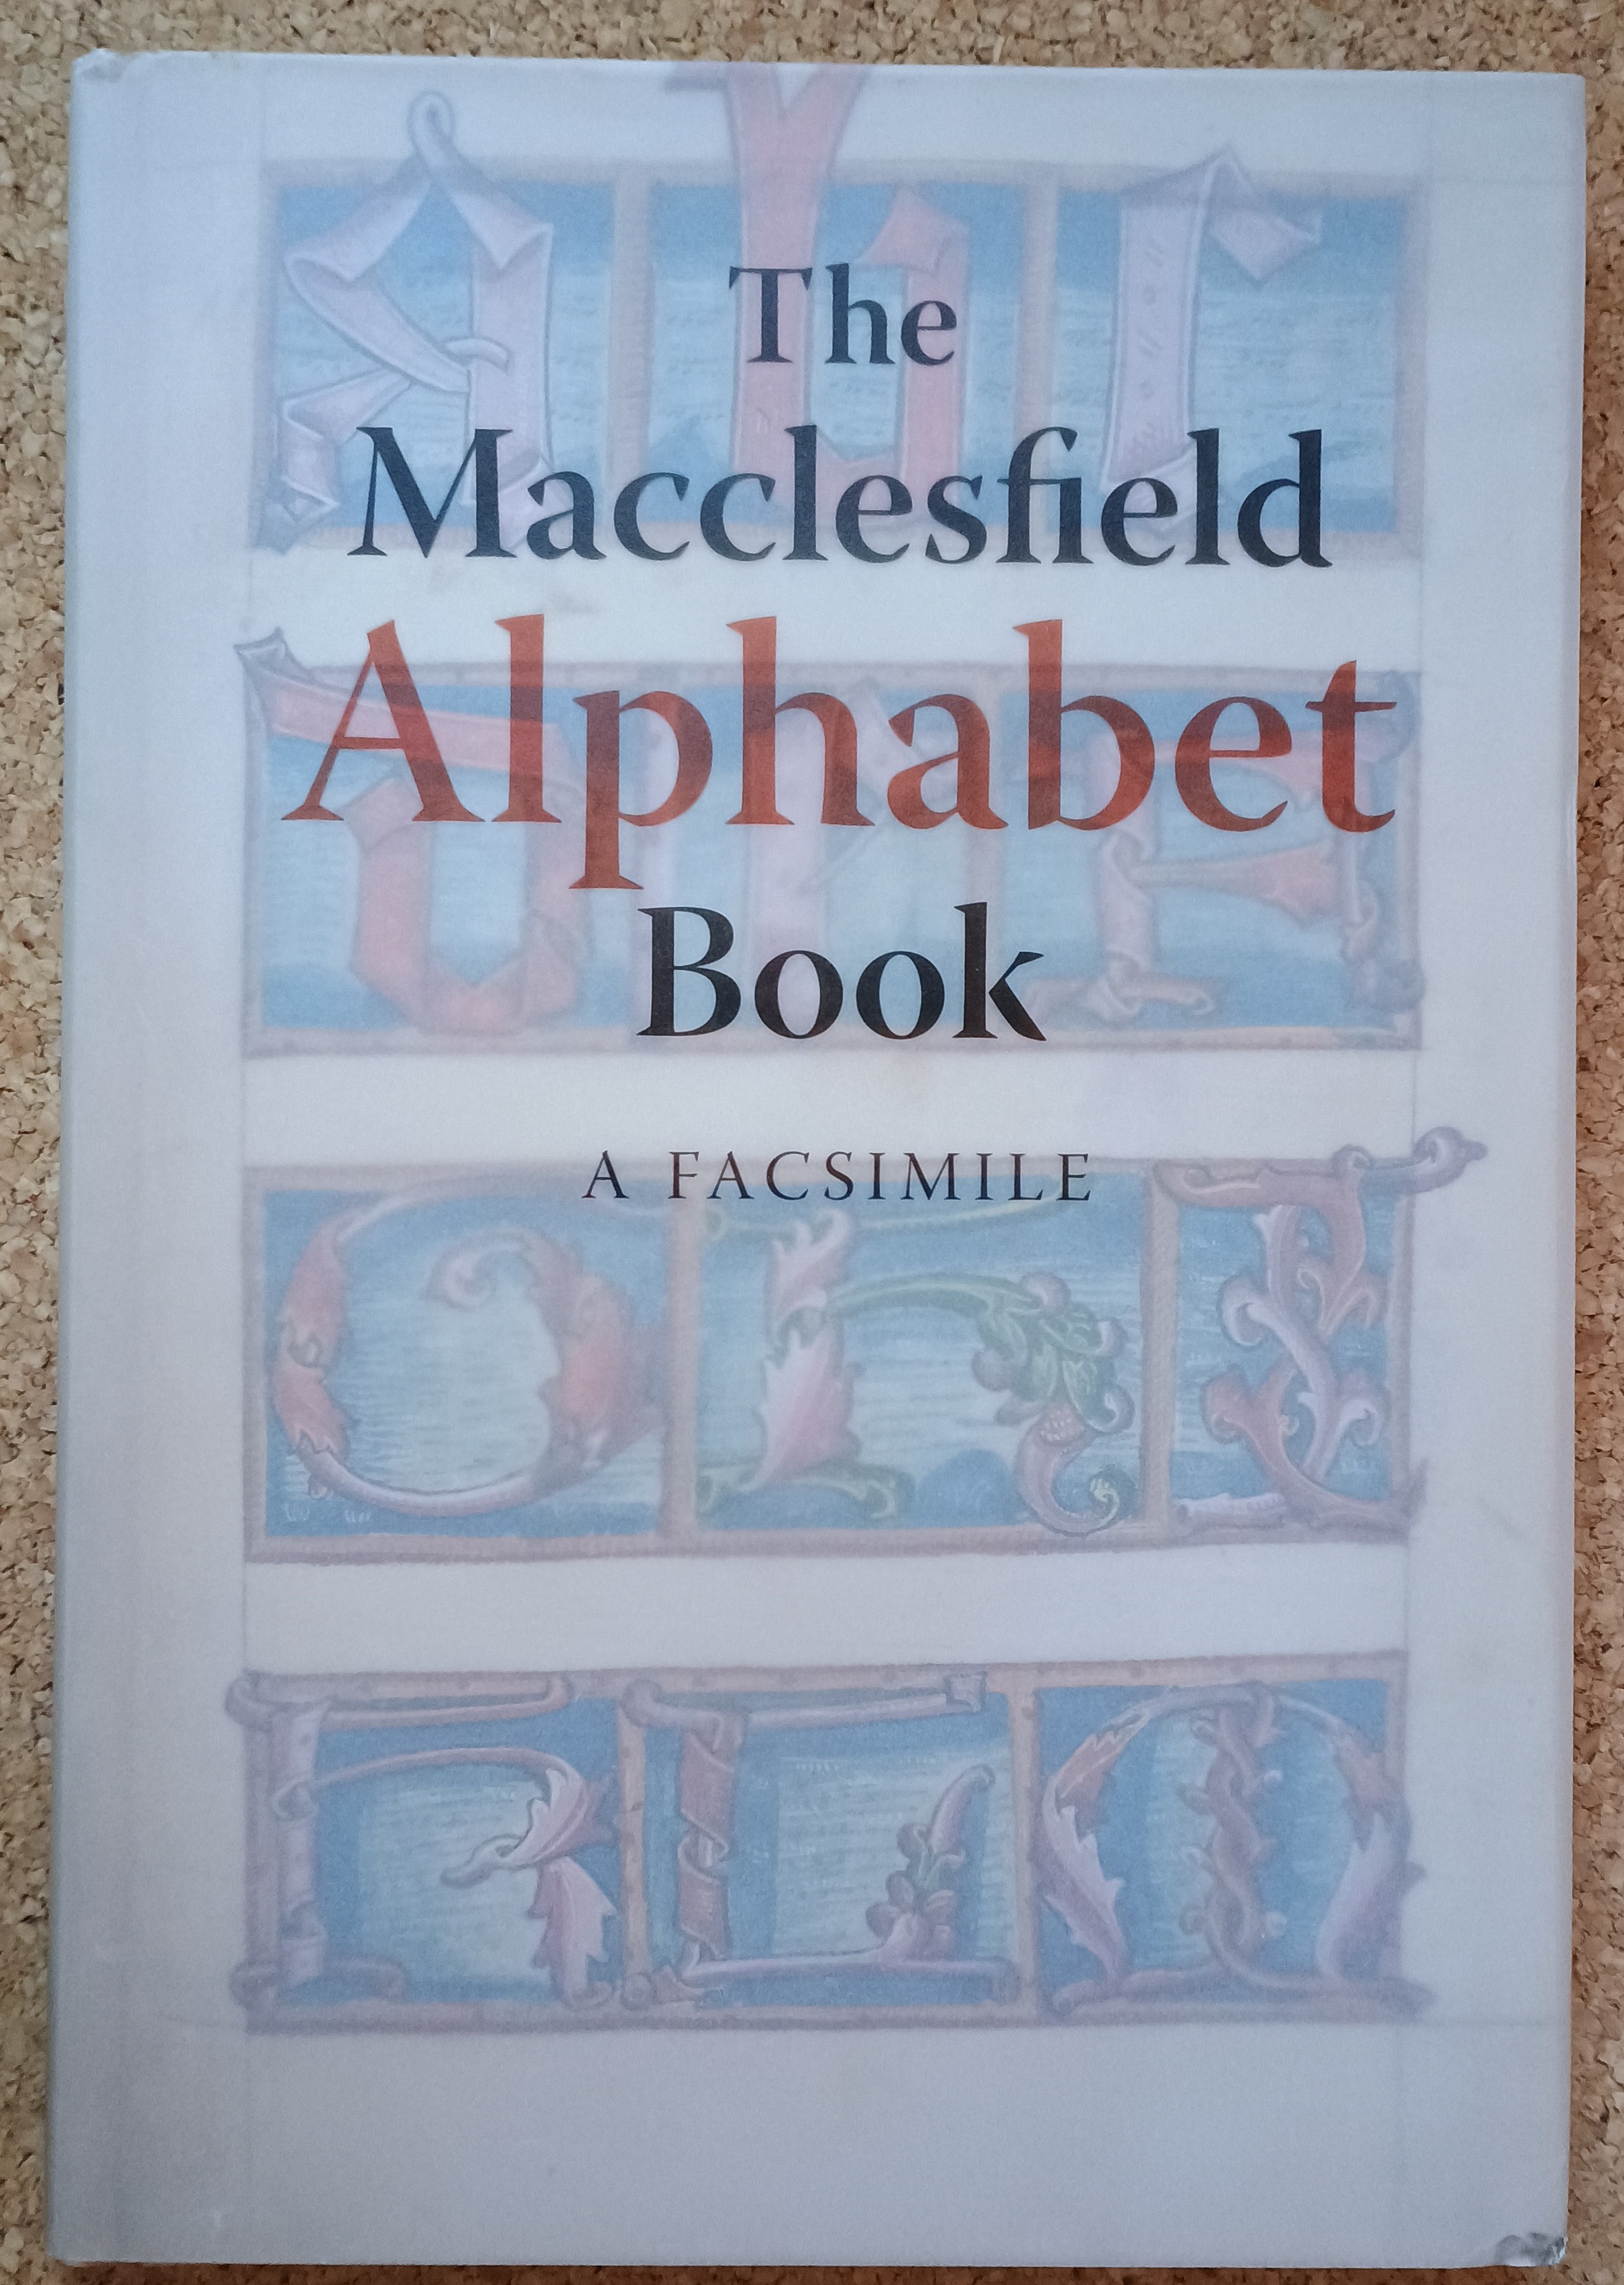 The Macclesfield Alphabet Book: A Facsimile (British Library Facsimile) - Christopher De Hamel